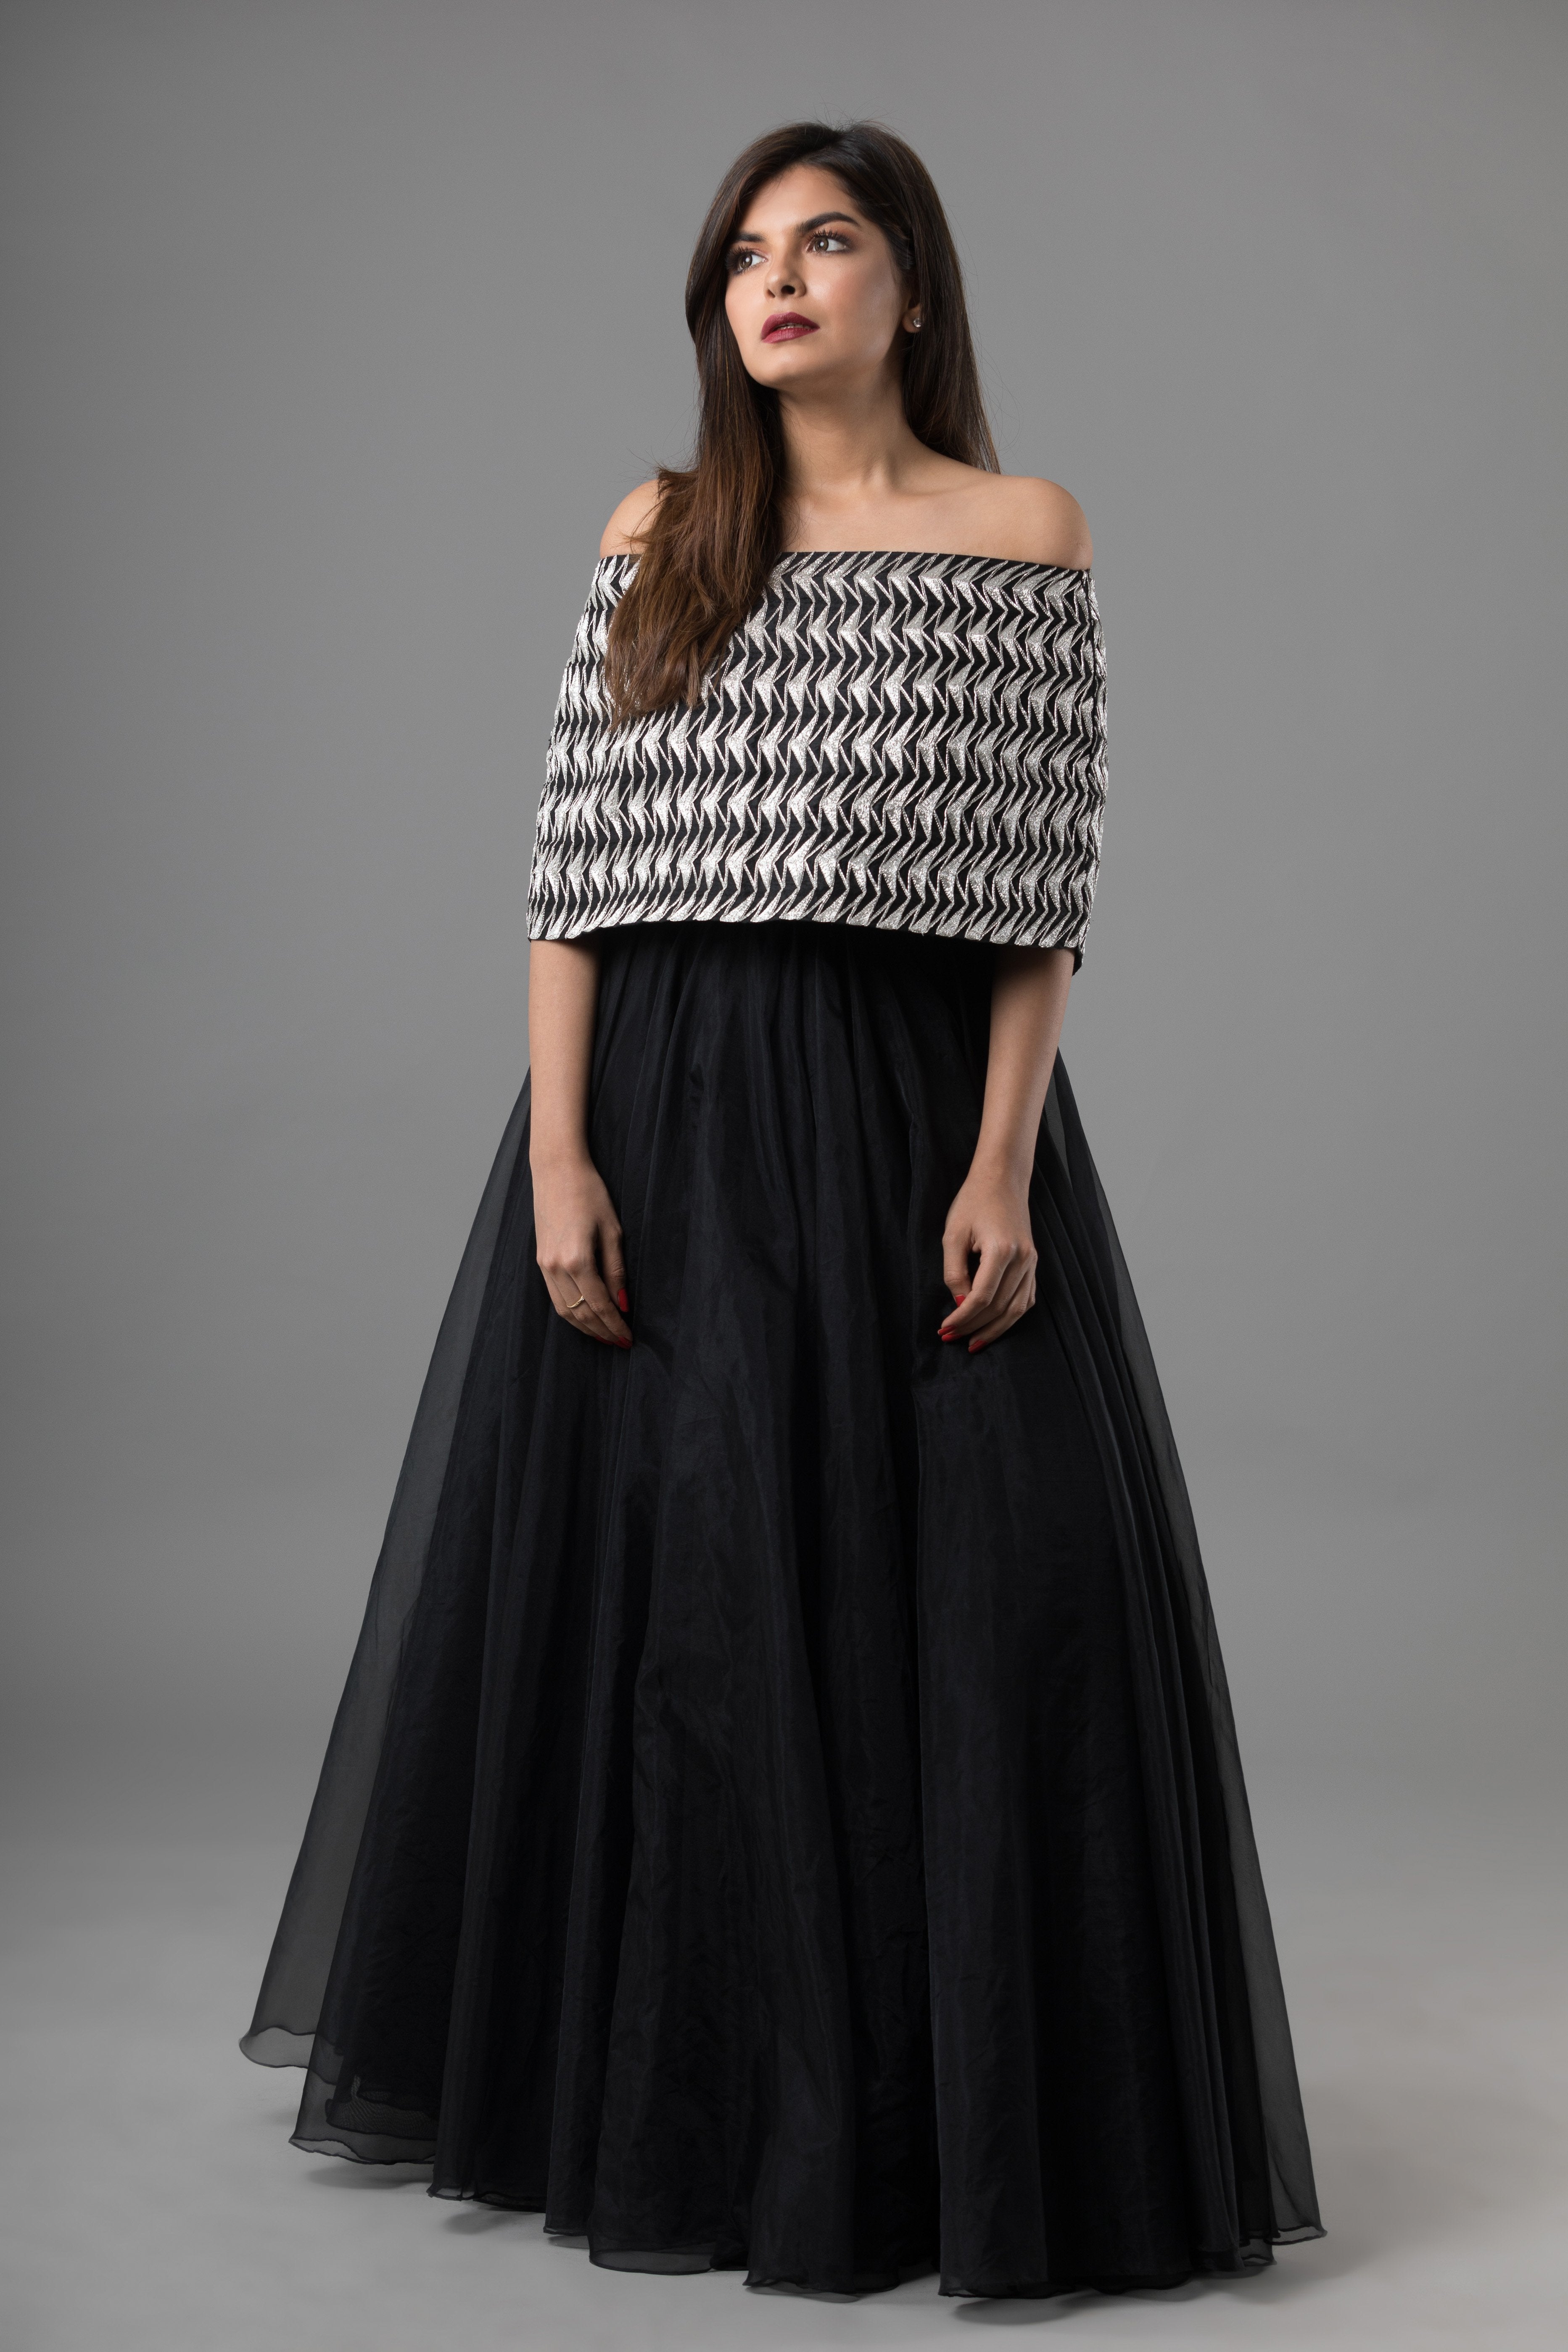 Sanjhana Reddy - Black Embroidered Cape & Black Organza Skirt